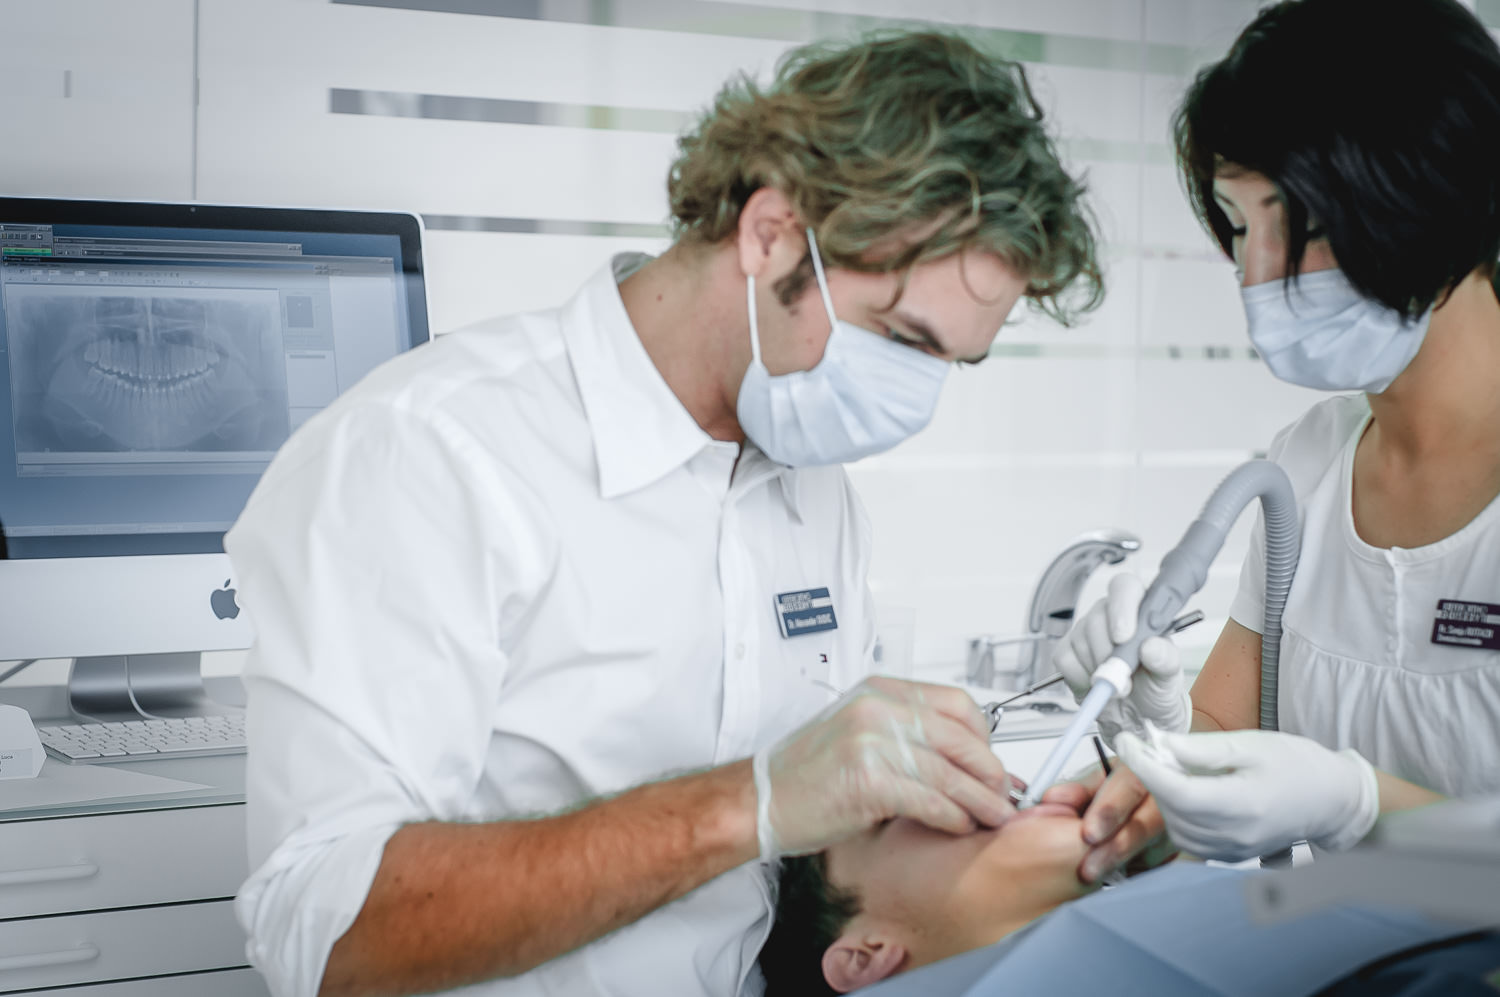 Orthodontics-Lakeside-Kieferortho-Waedenswil-Zurich-Braces-Invisalign-Dental-Office-Dr-Med-Dentist-English-Treatment-3175.jpg